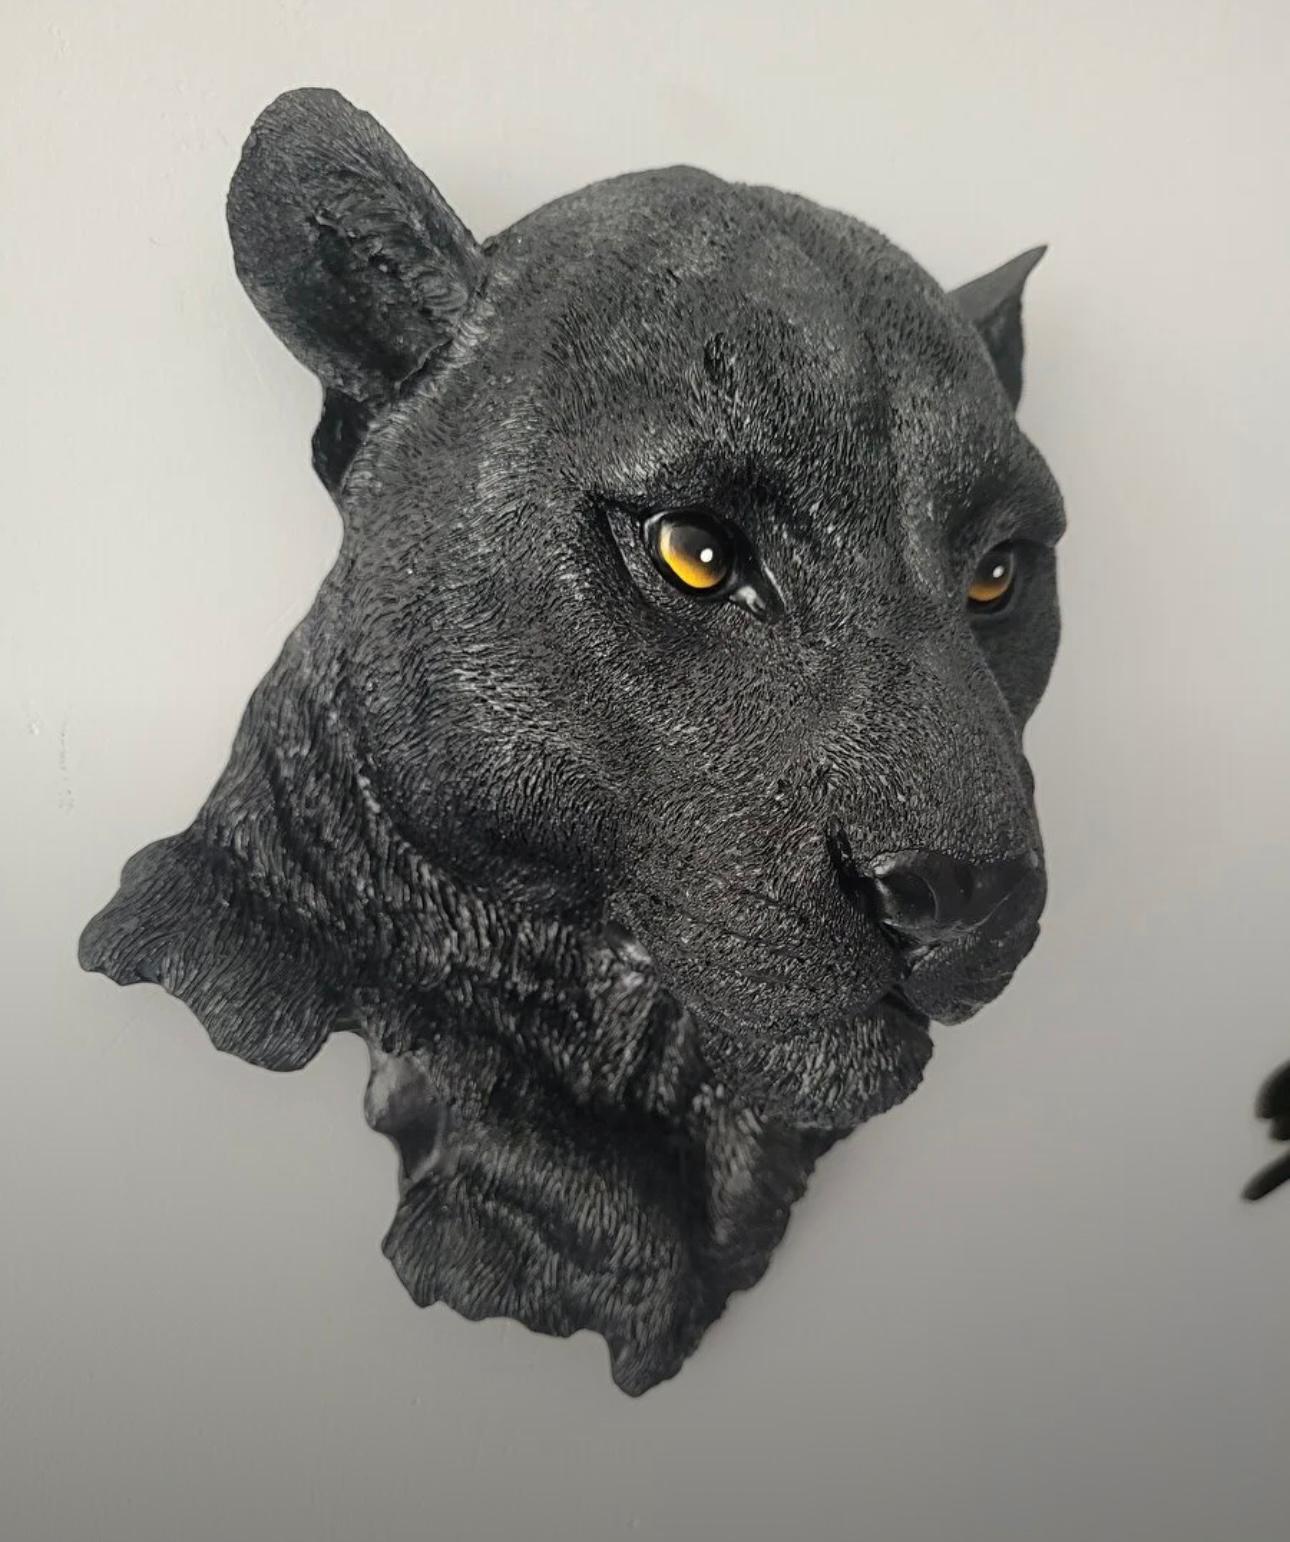 Jaguar Sculpture 9 inches